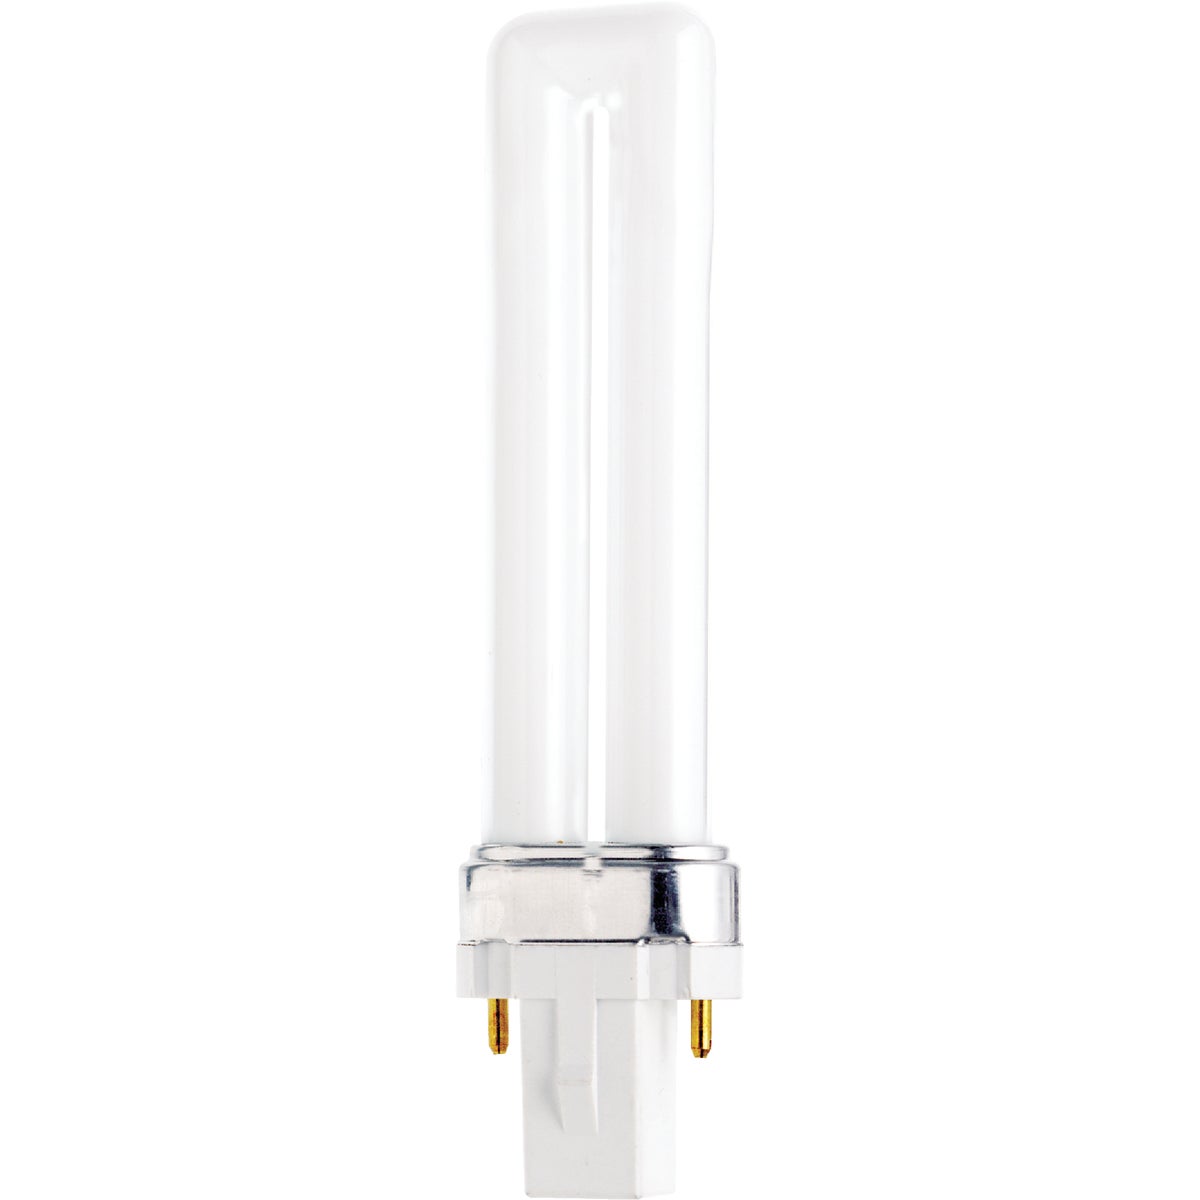 Item 513705, T4 G23 pin-base CFL (compact fluorescent) bulb. Energy efficient.